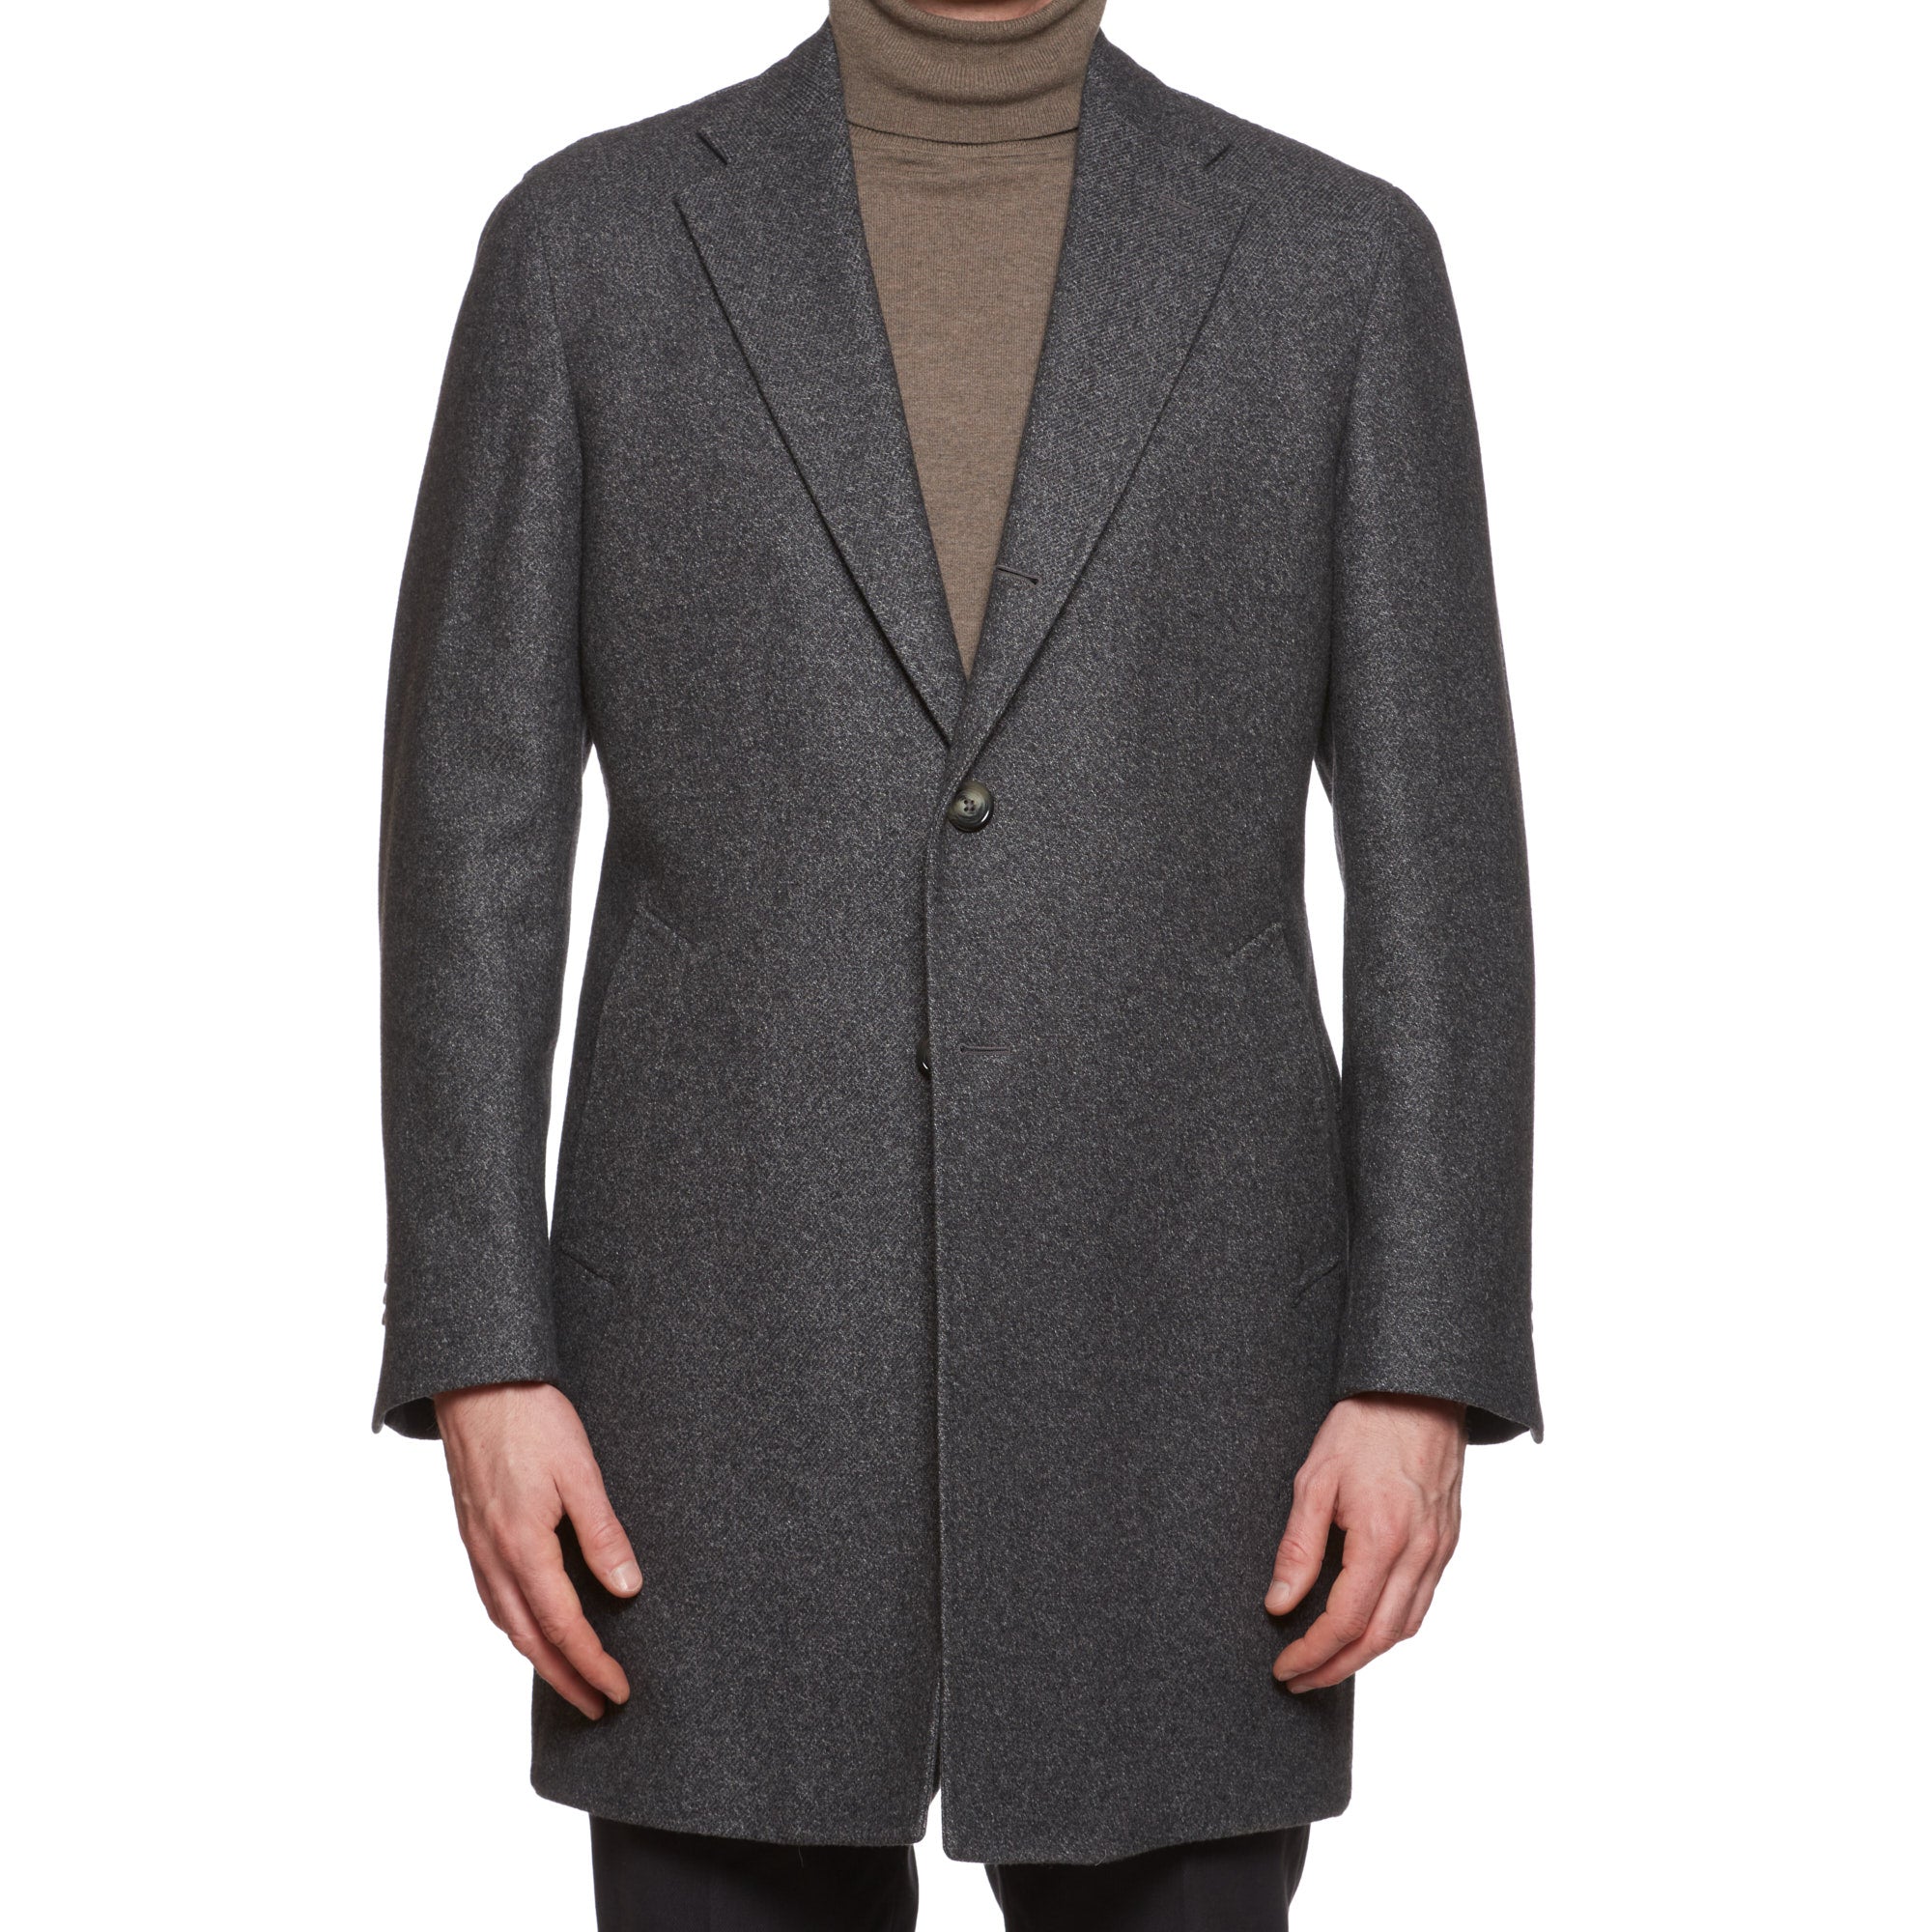 VINCENZO PALUMBO Napoli "Viky" Gray Wool Back Belted Coat EU 52 NEW US 42 VINCENZO PALUMBO